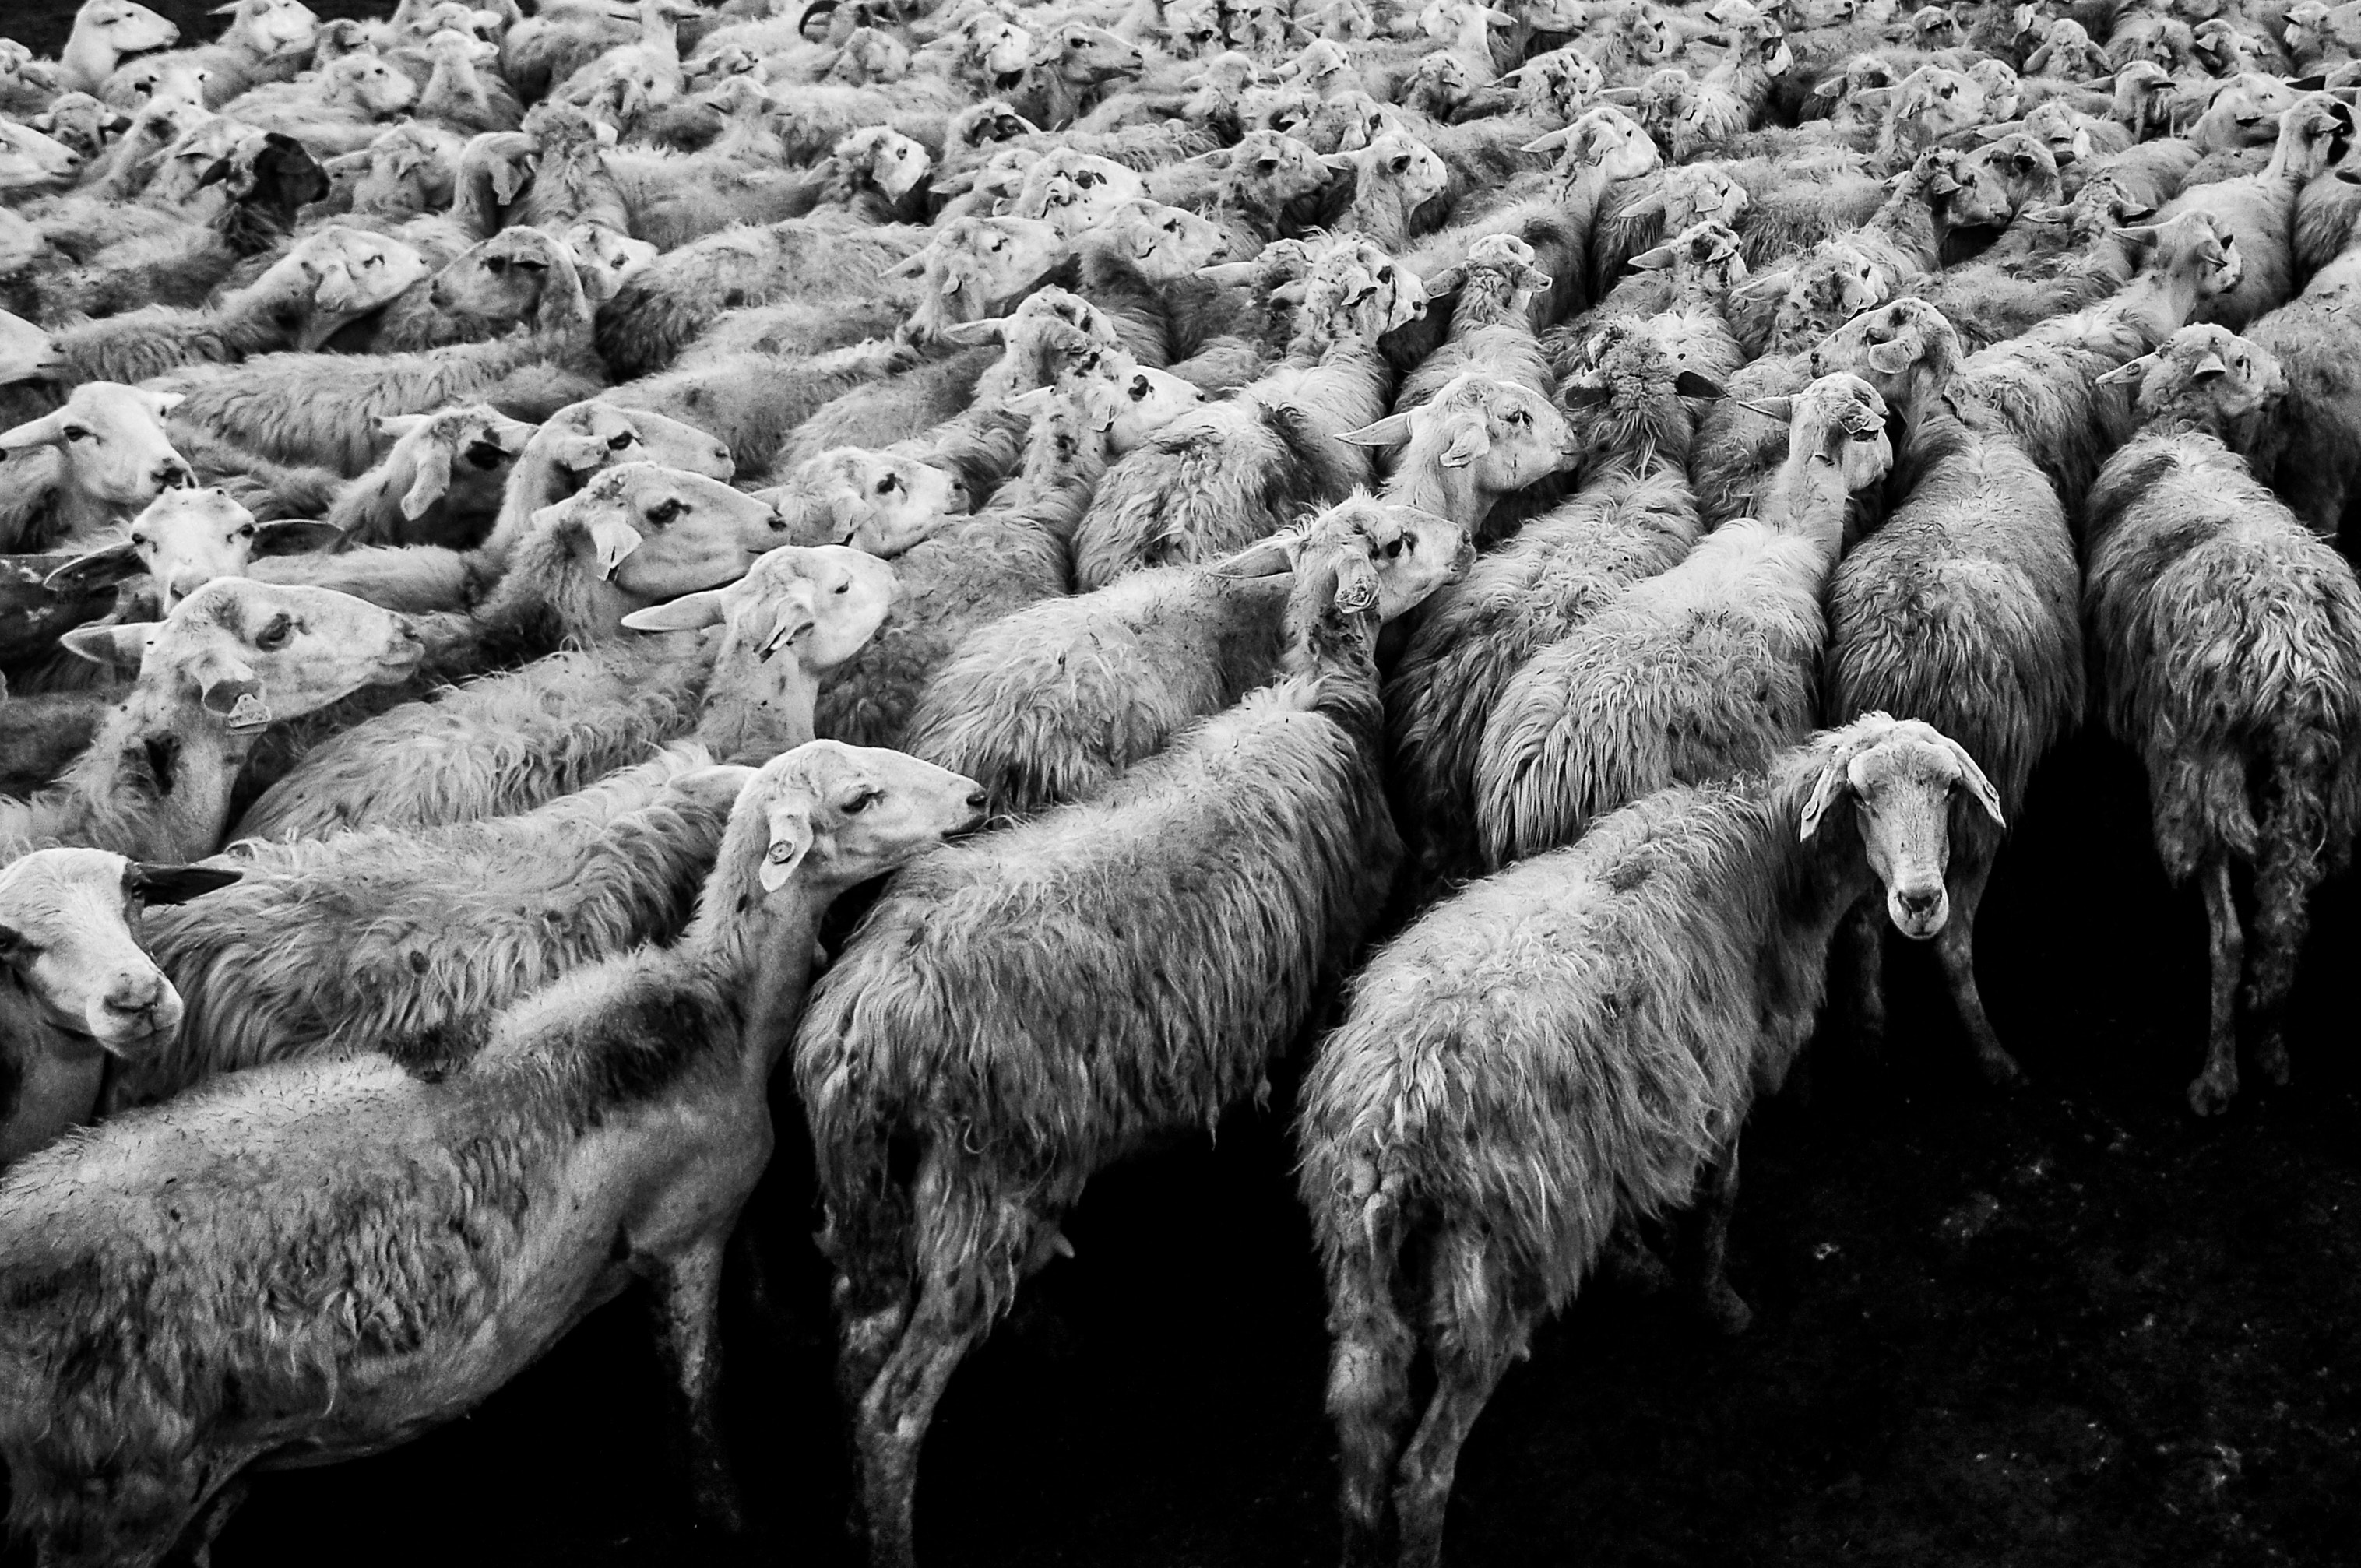 shepherd the flock